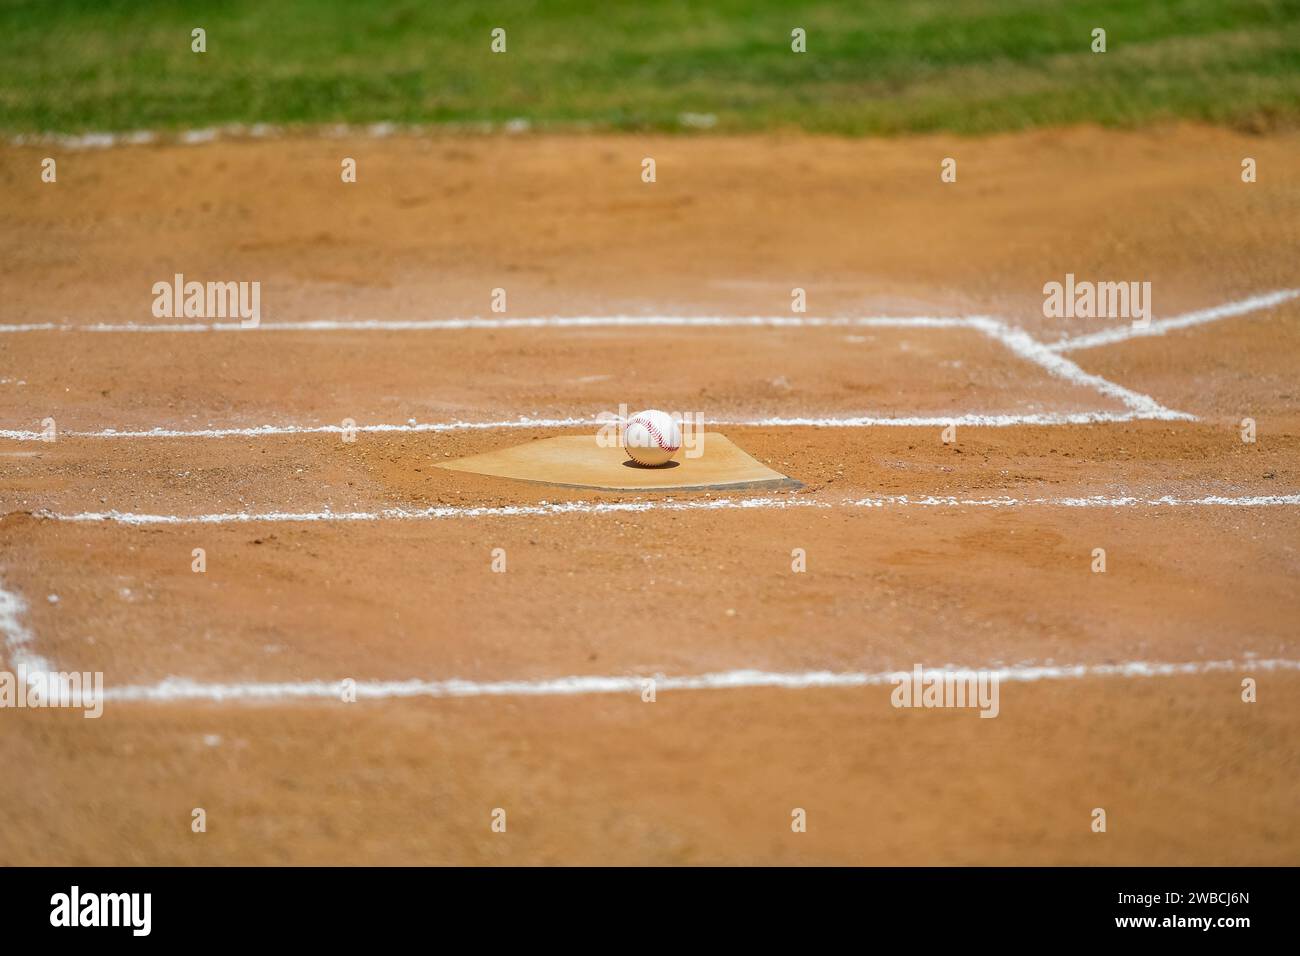 Baseball game, baseball ball sitting on the home plate, base, during the baseball game. Stock Photo